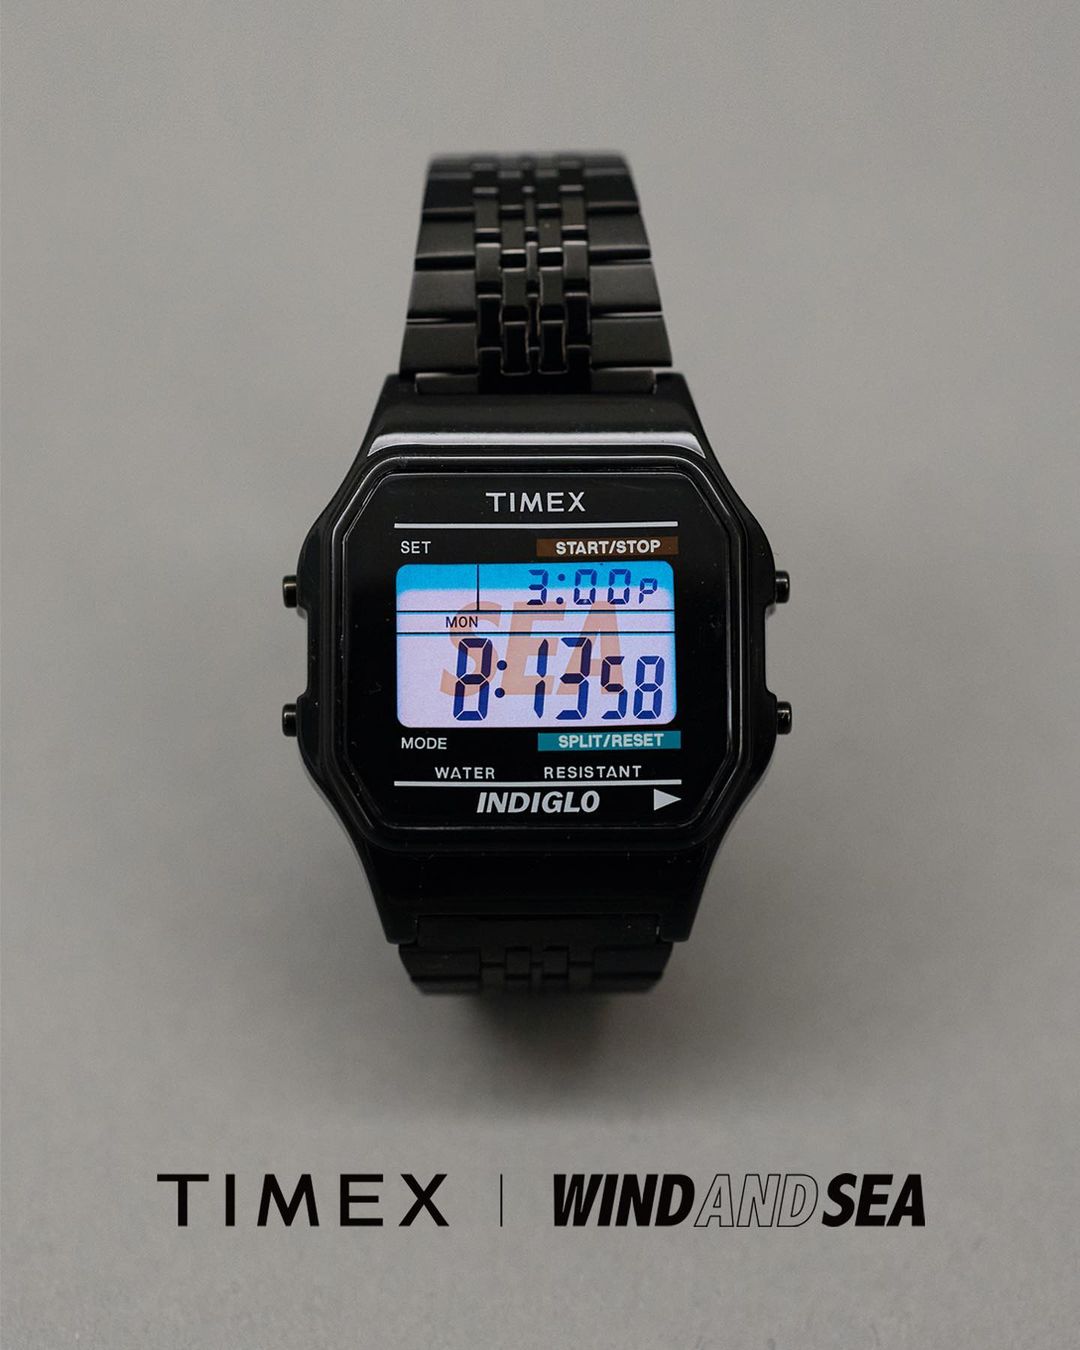 WIND AND SEA 腕時計腕時計(アナログ) - 腕時計(アナログ)